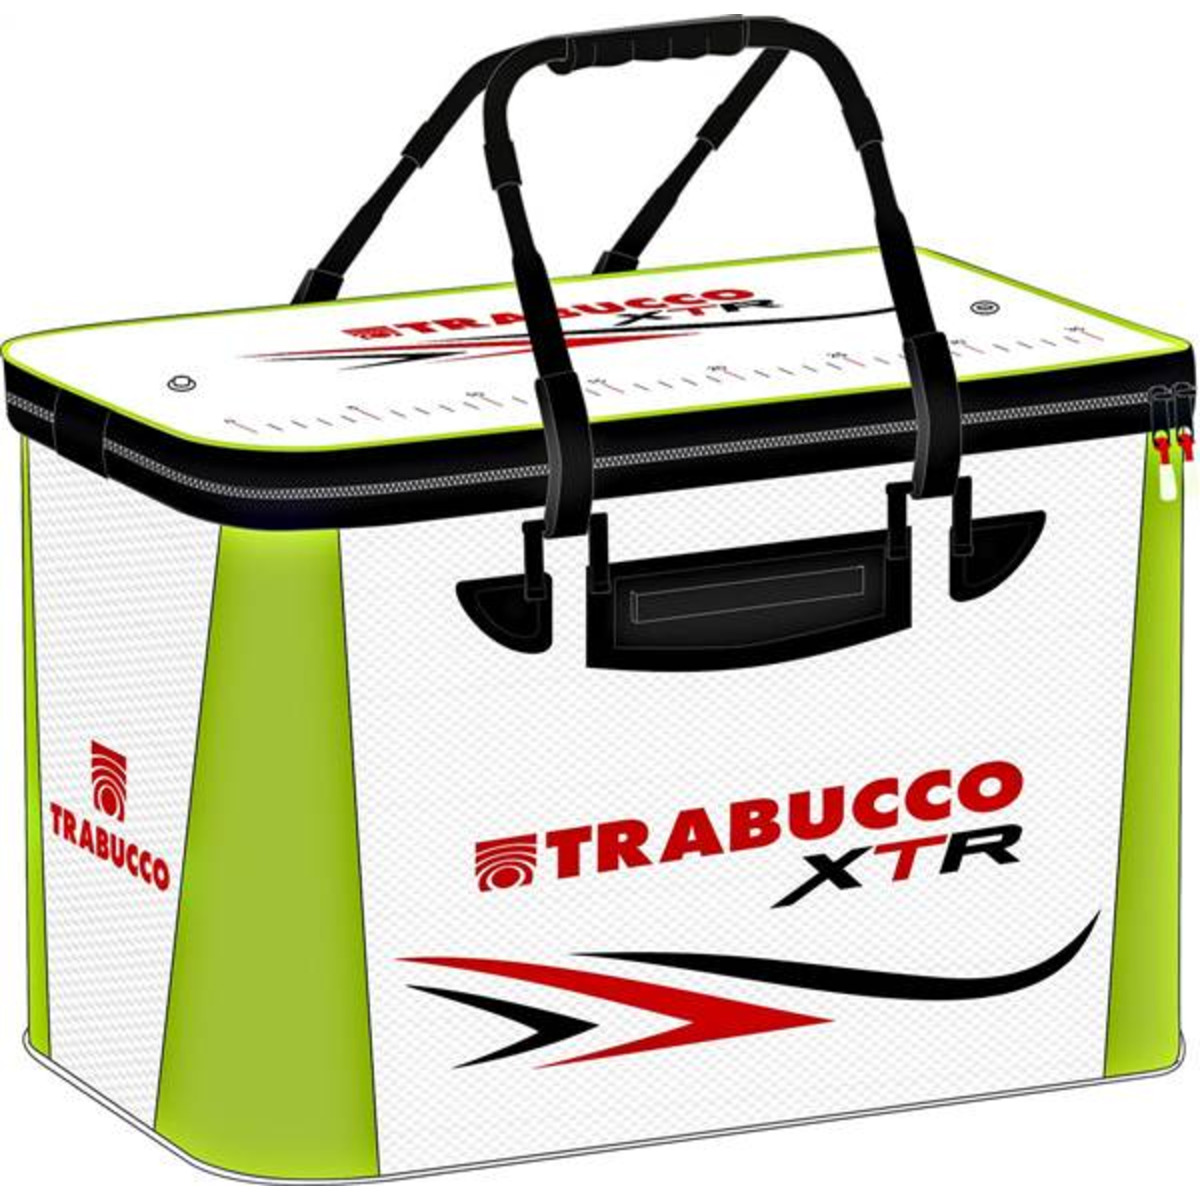 Trabucco Eva White Tackle Bags - 45x30x29 cm